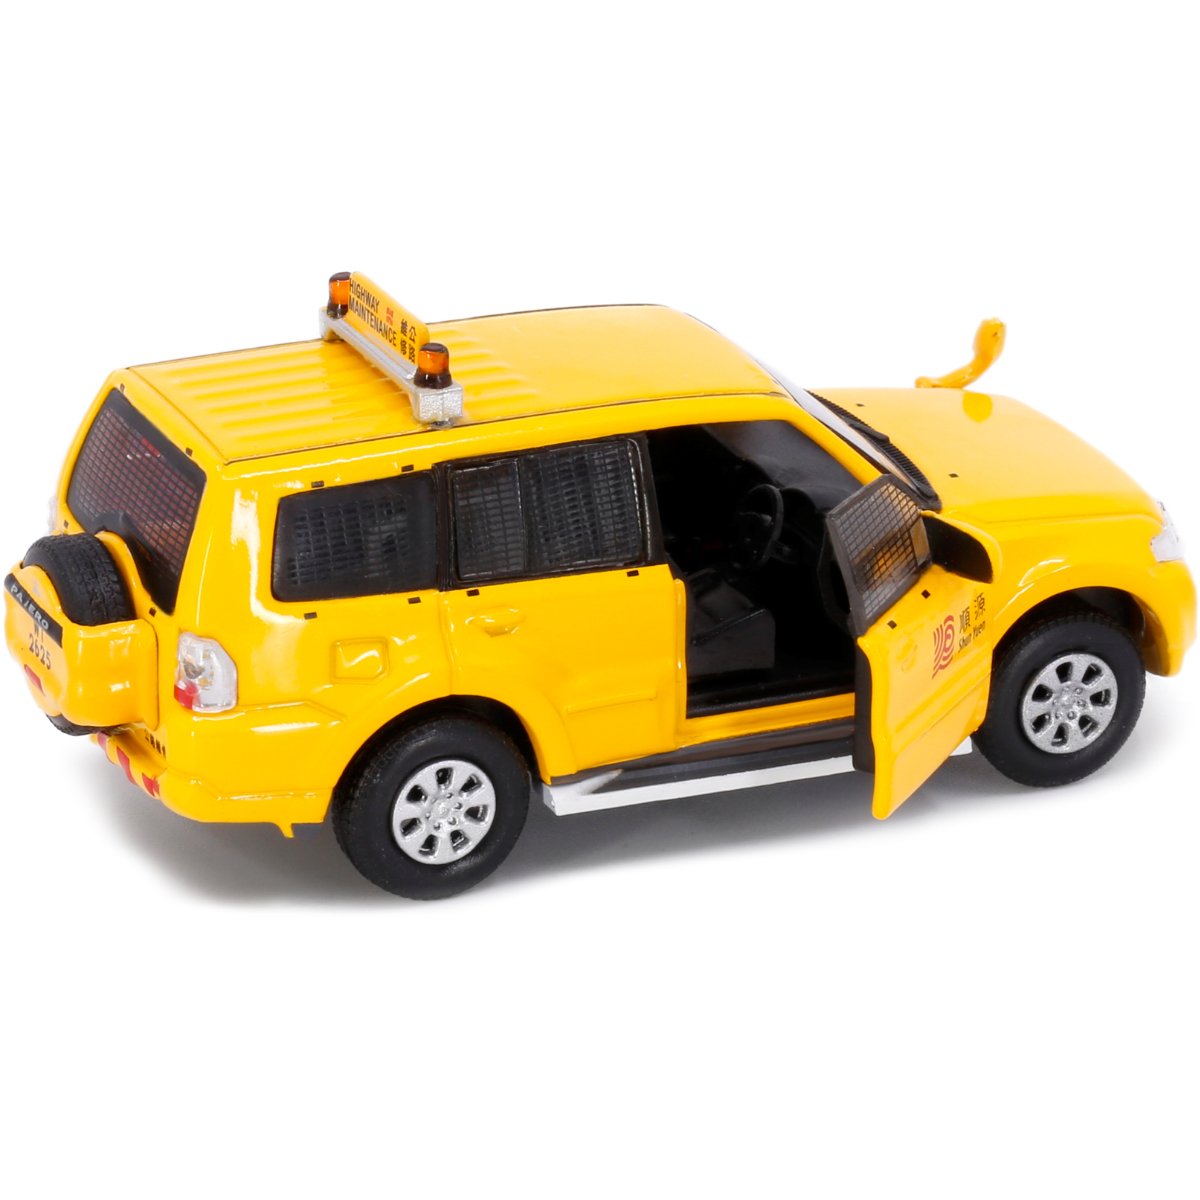 Tiny Models Mitsubishi Pajero 2015 Shun Yuen Highway Maintenance (1:64 Scale) - Phillips Hobbies